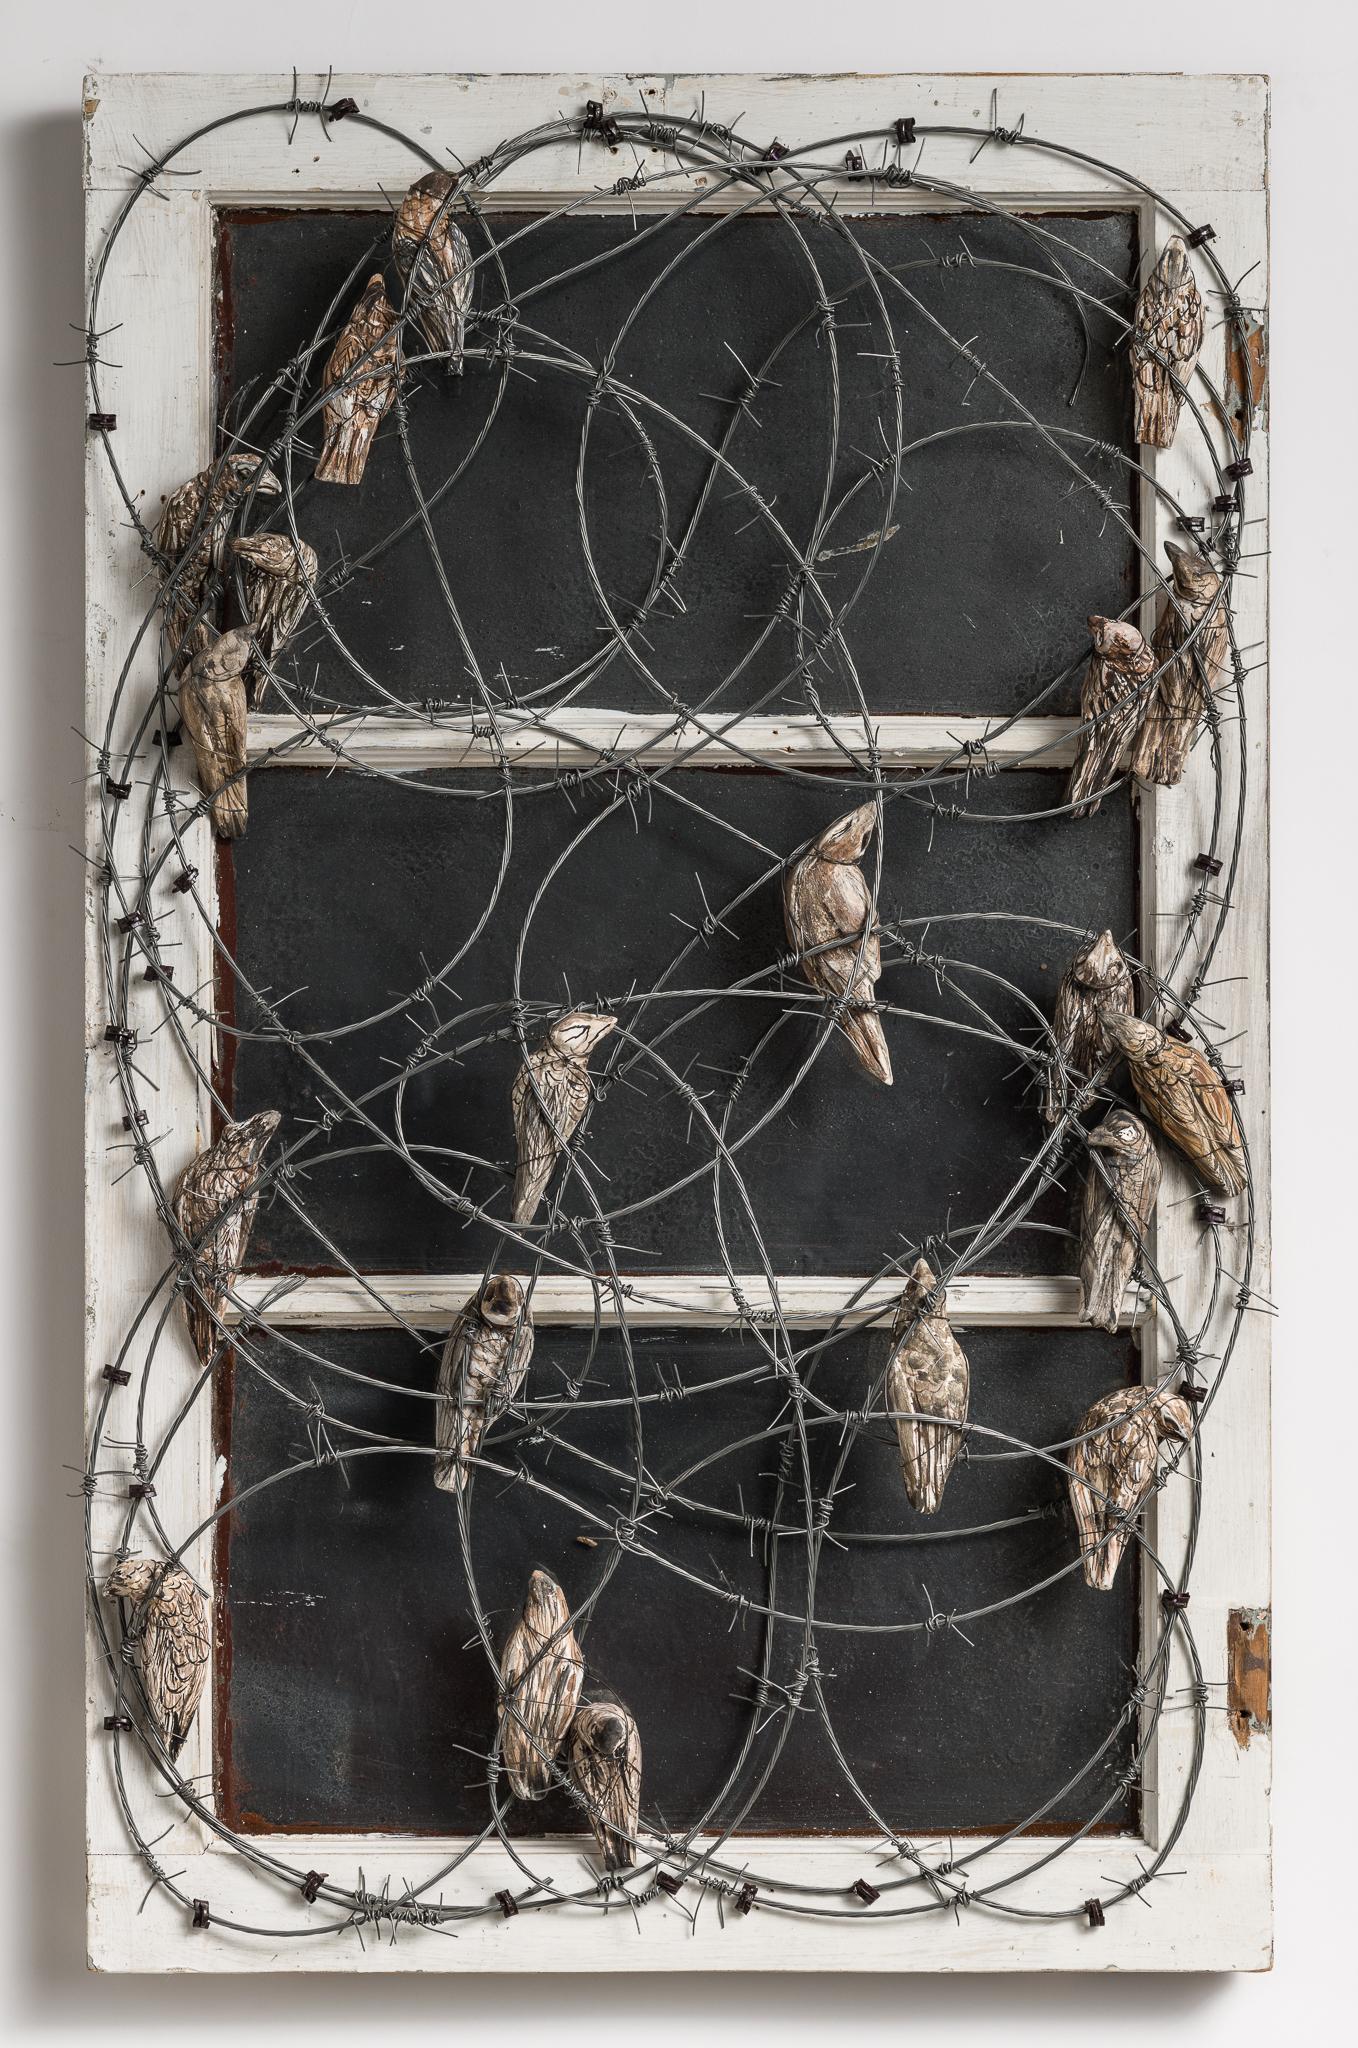 Elizabeth Jordan Figurative Sculpture - Window Frame with Birds & Barbwire: 'Wren Day'